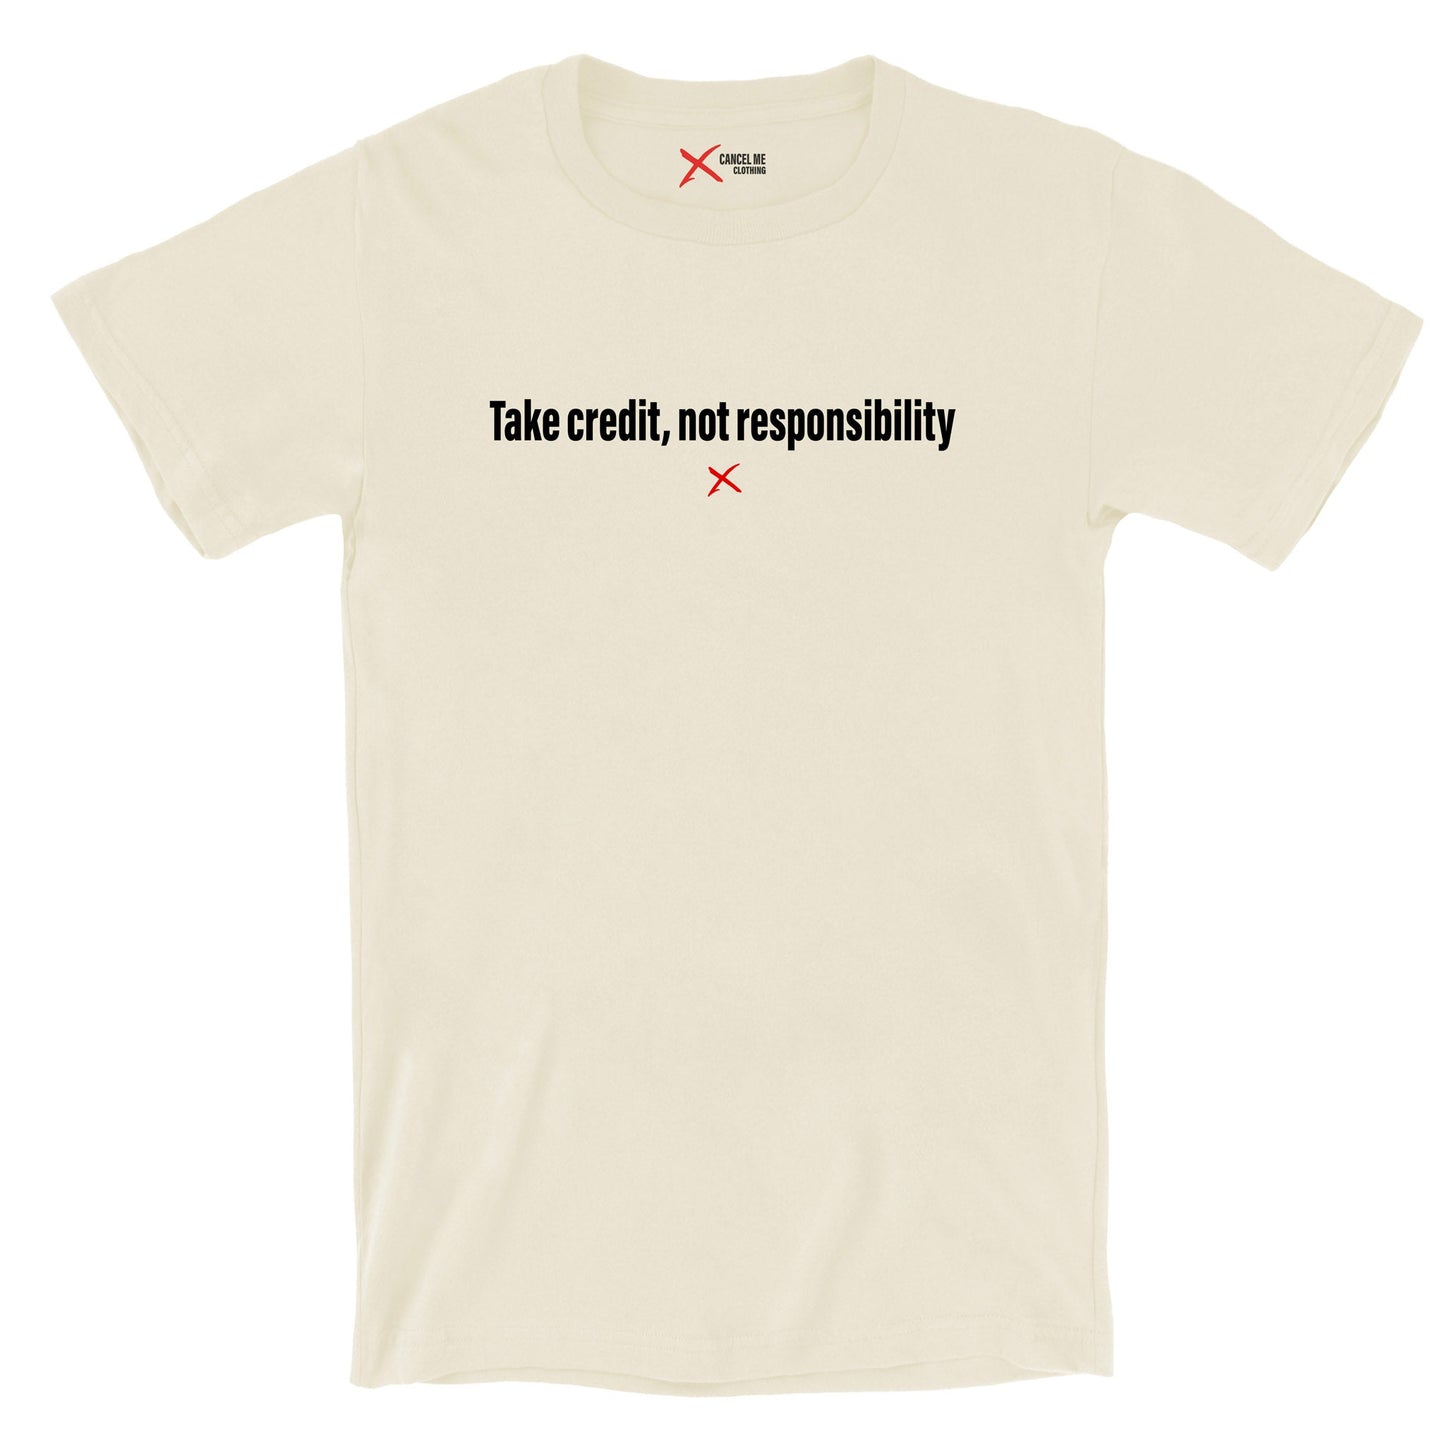 Take credit, not responsibility - Shirt